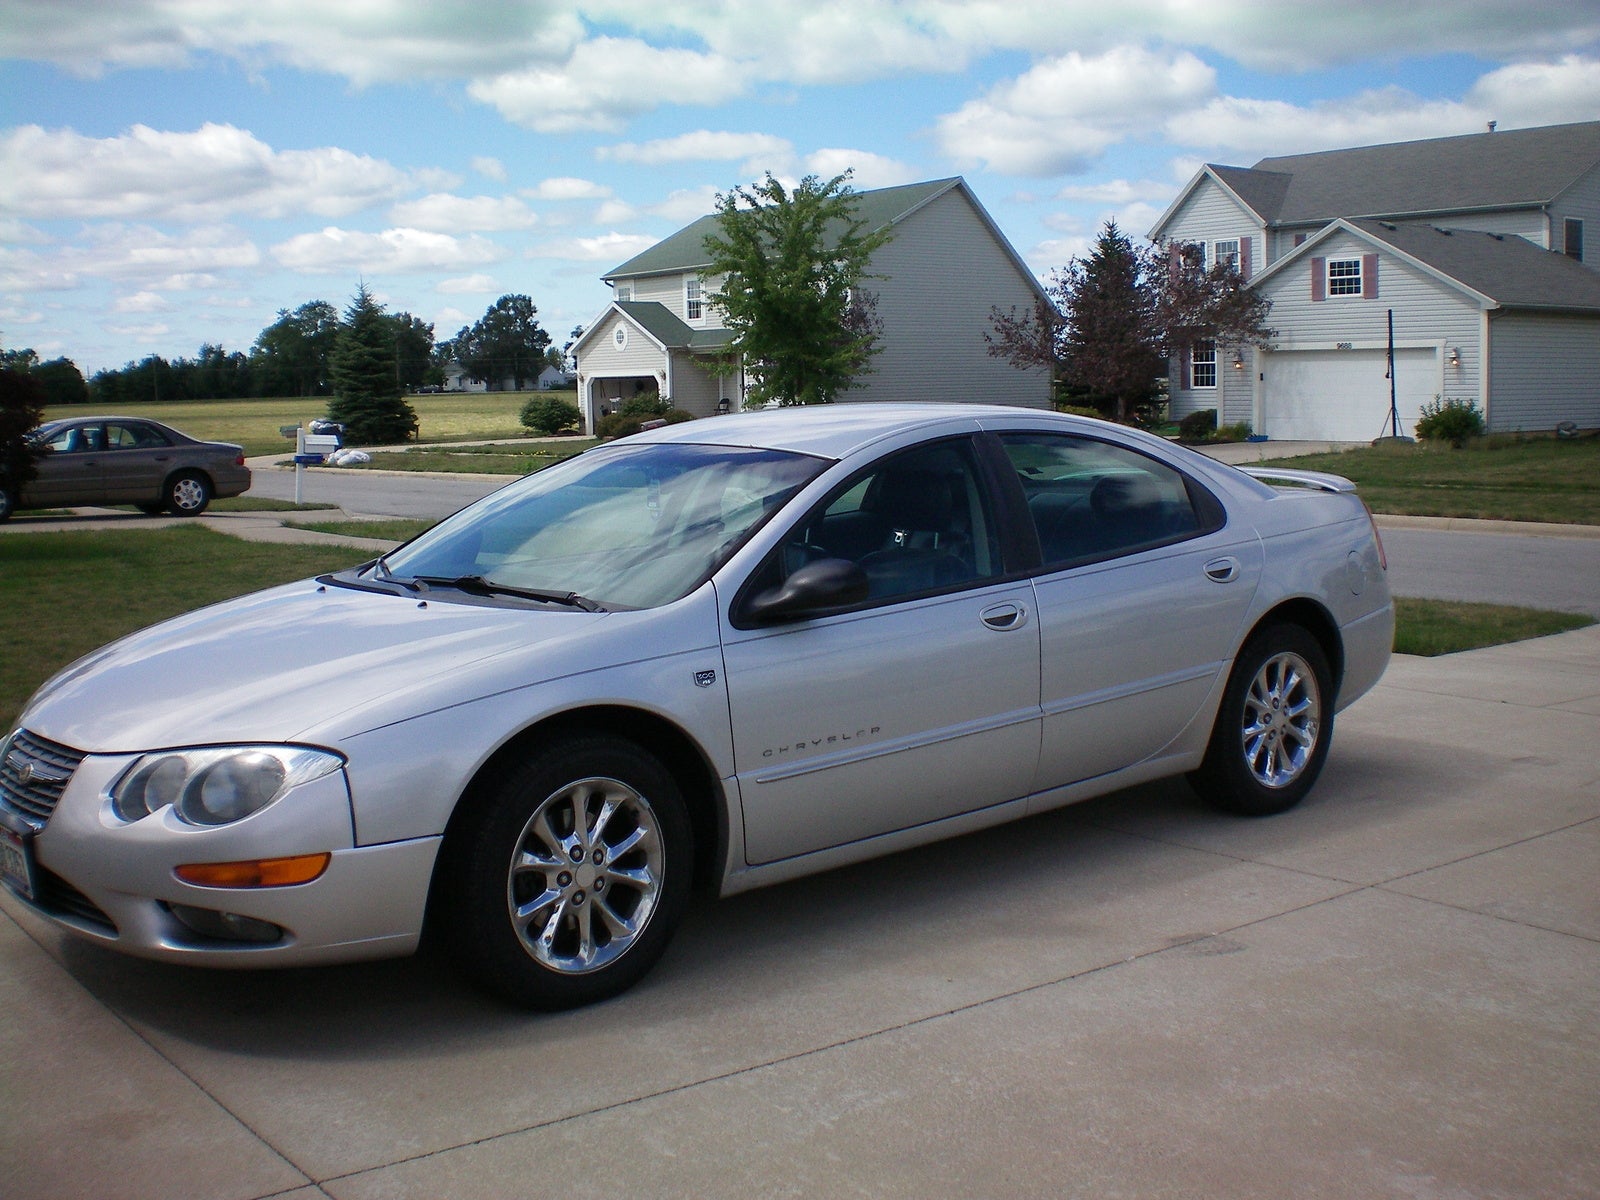 Chrysler 300m 2000 review #1